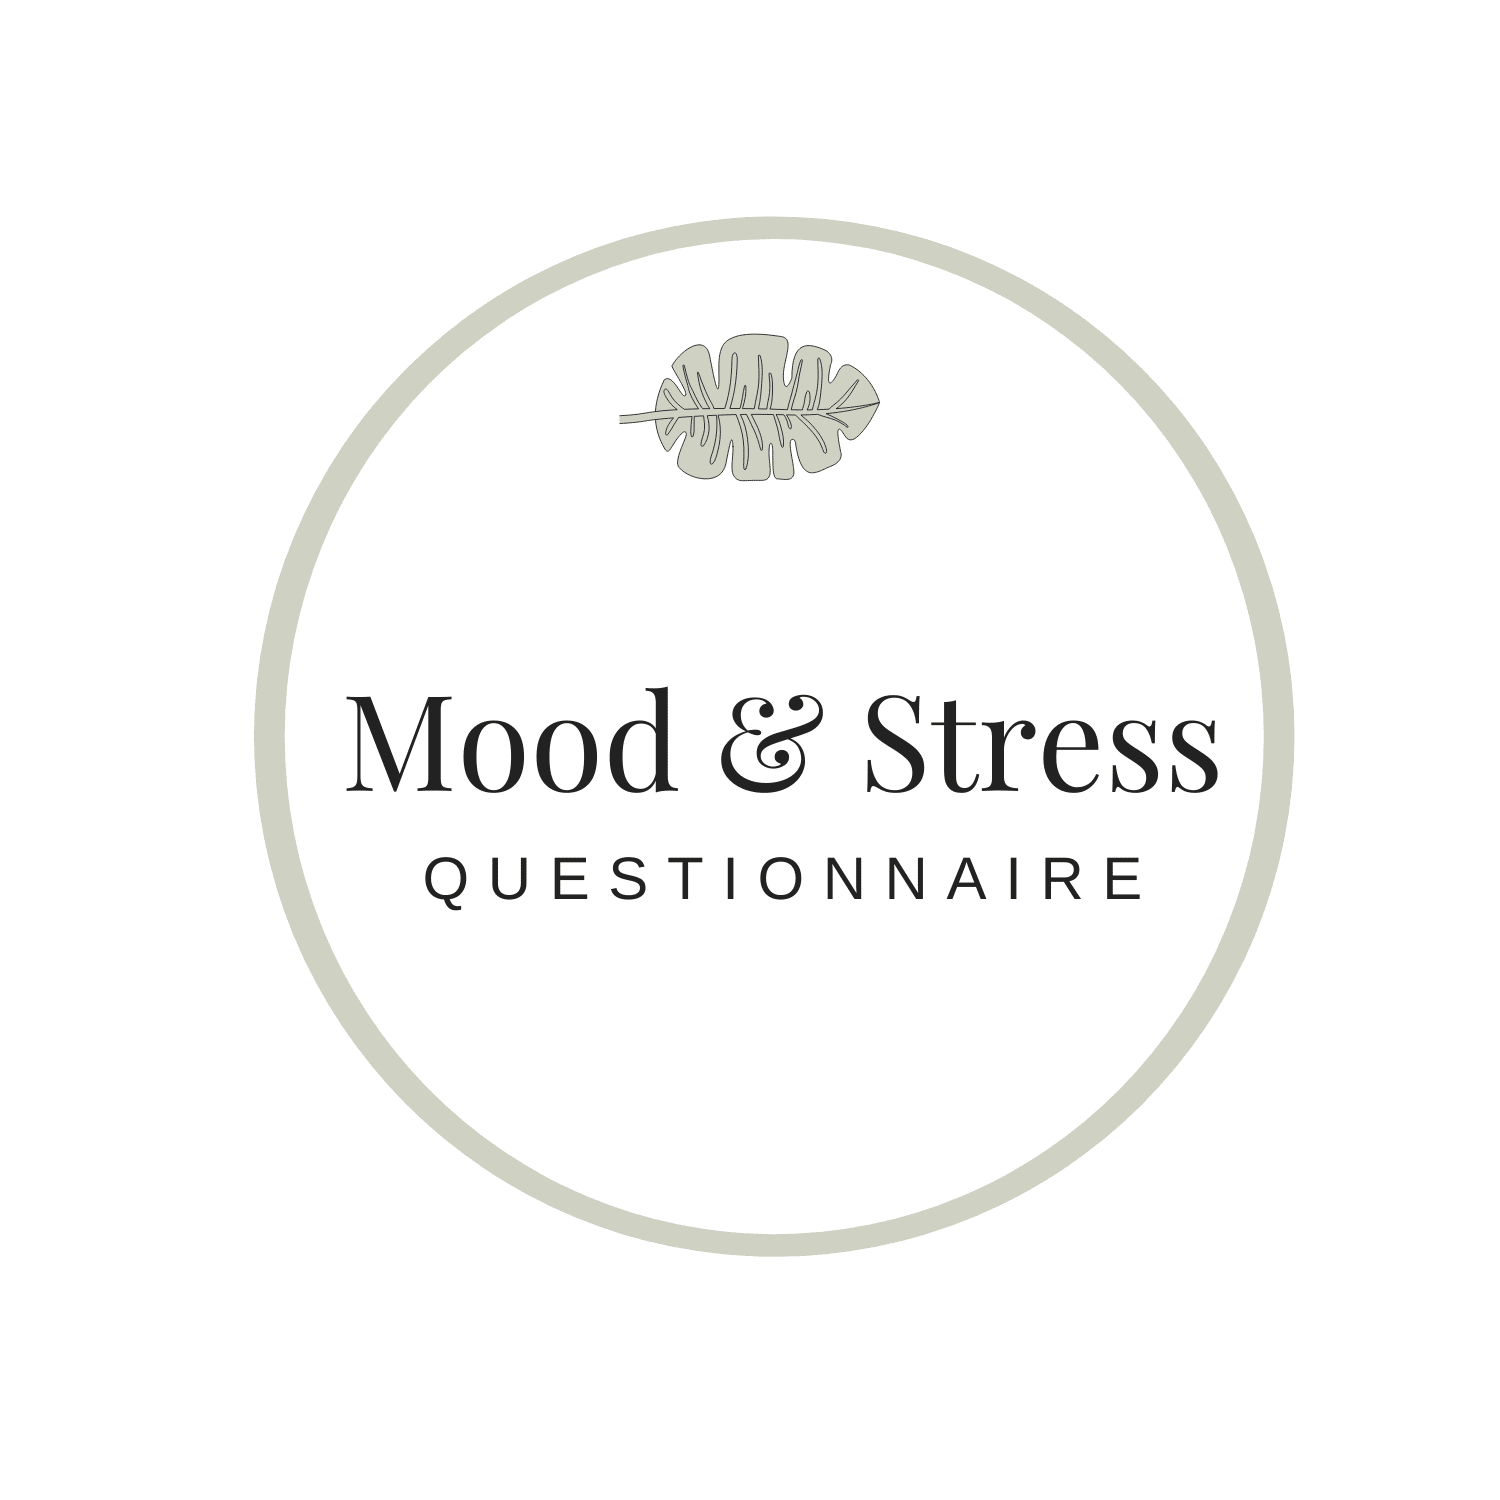 Mood & Stress Questionnaire